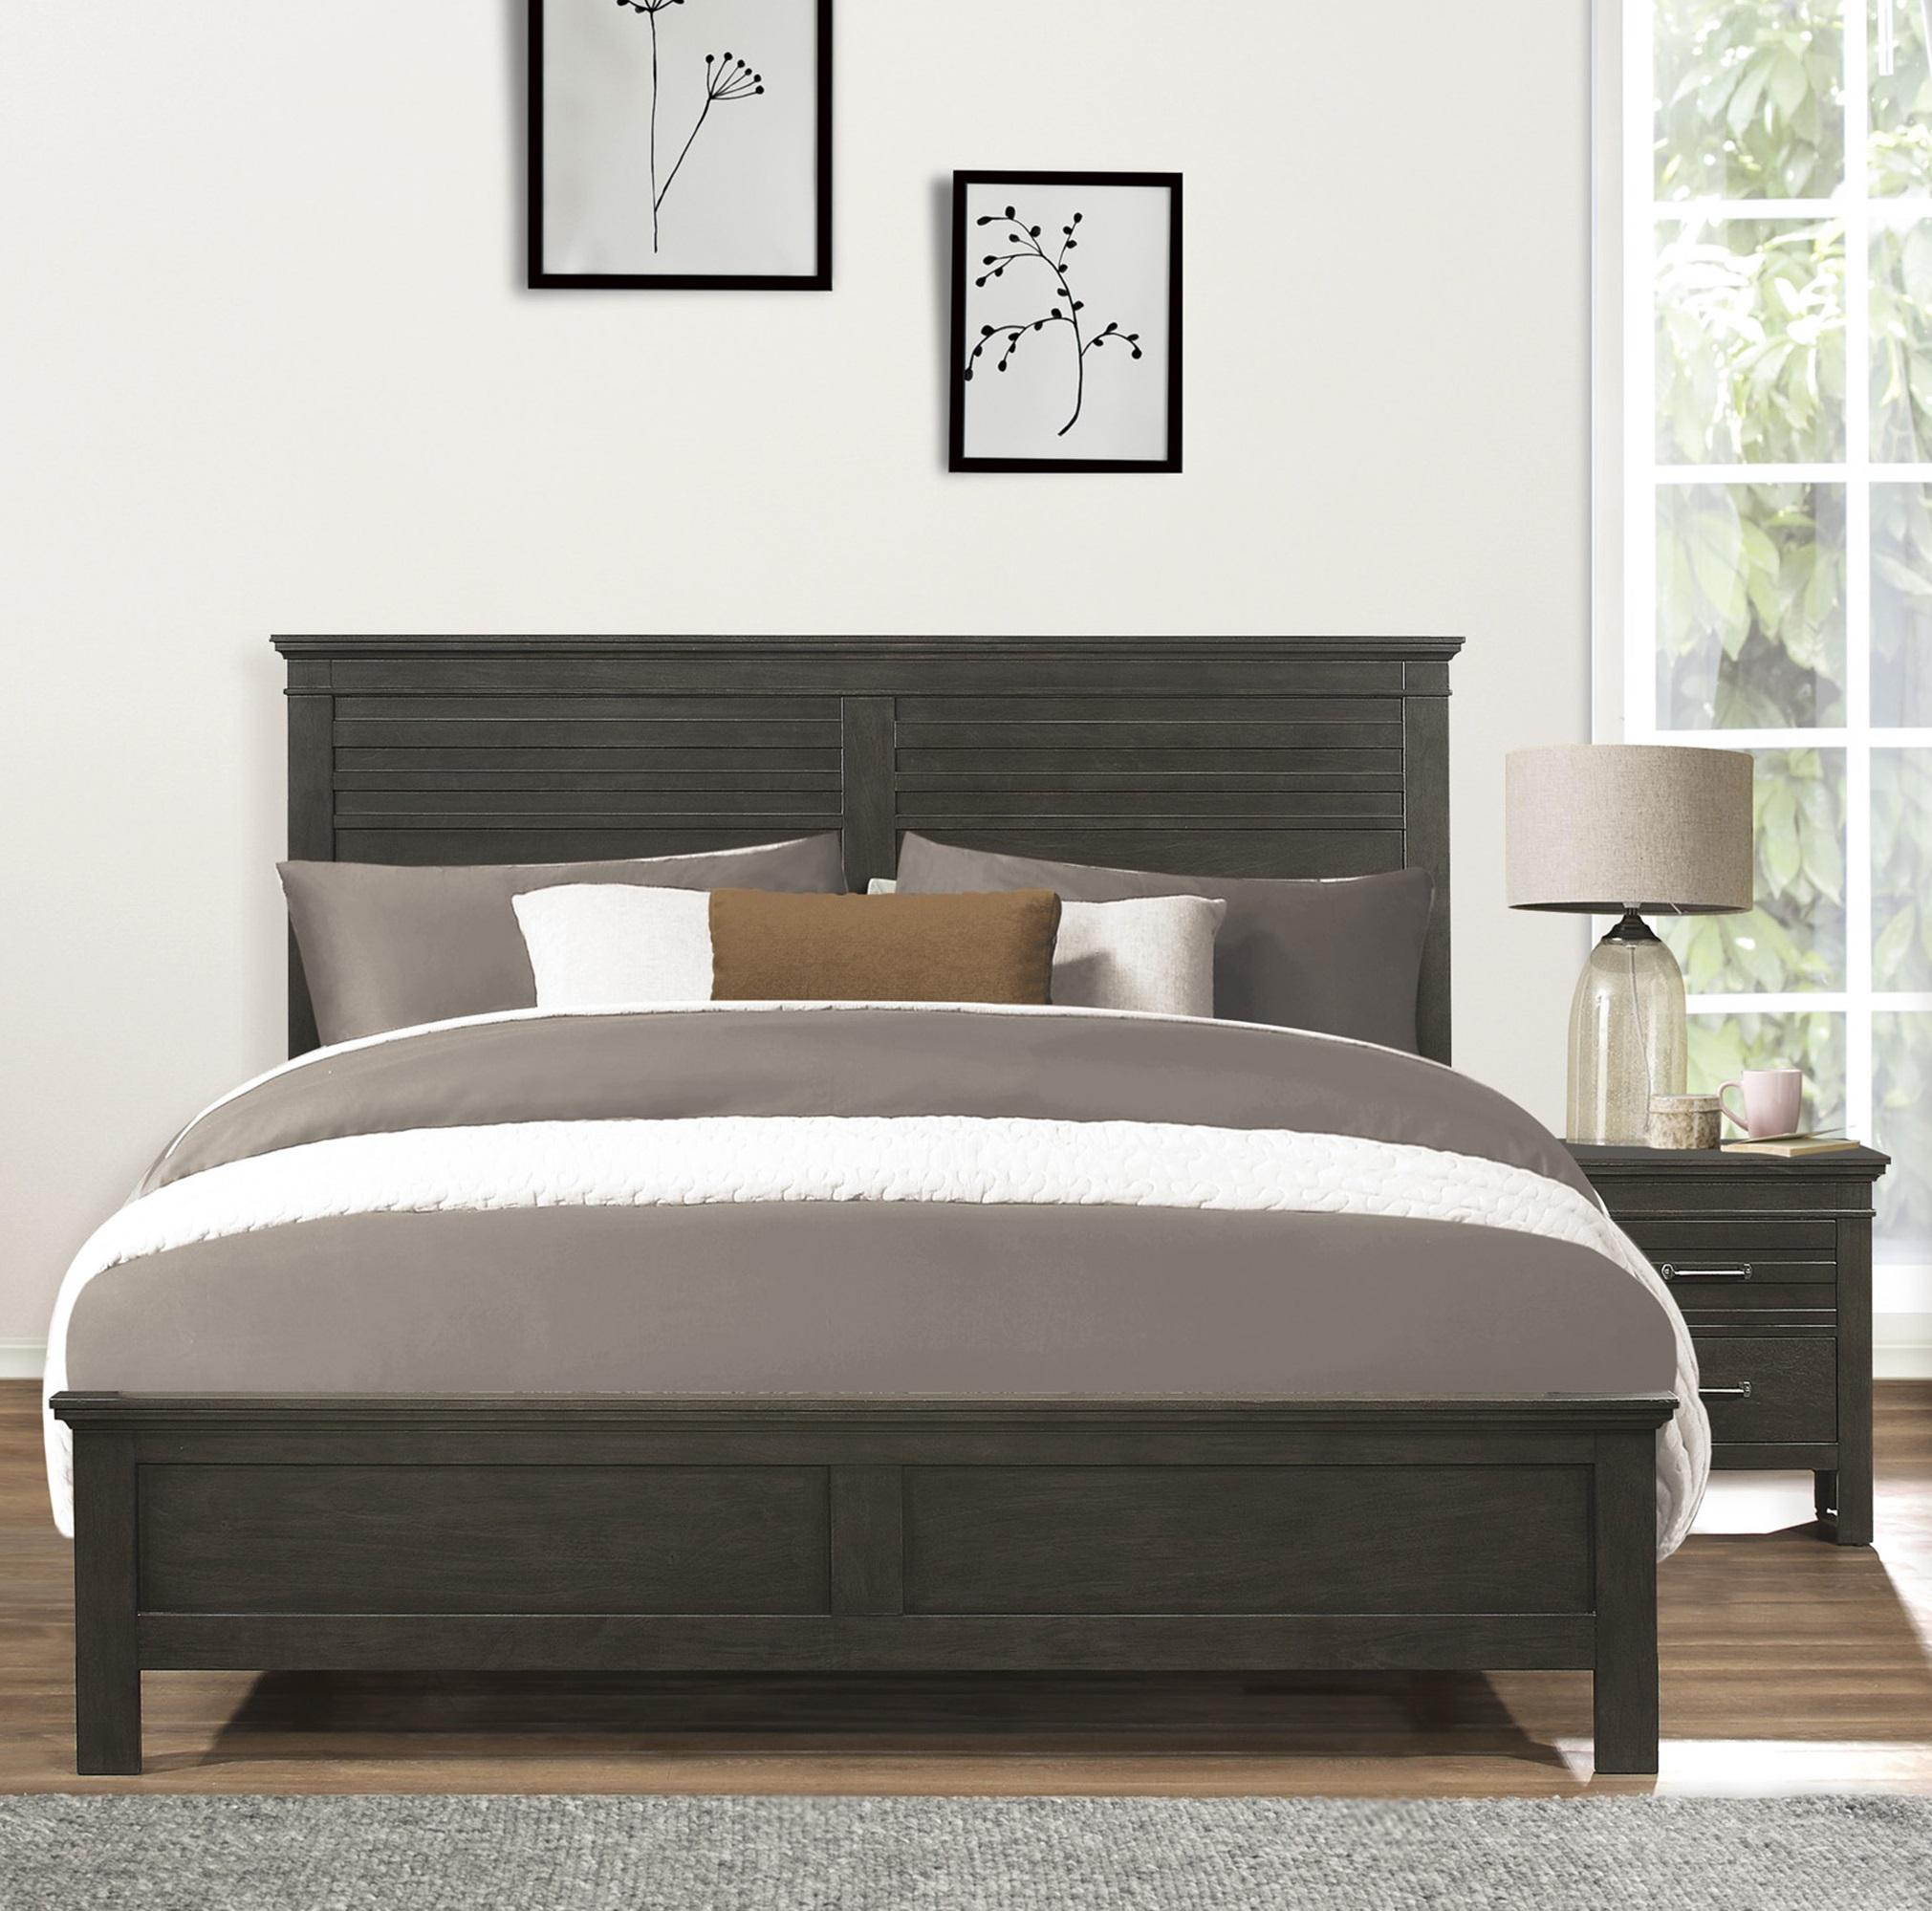 

    
Transitional Charcoal Gray Wood Queen Bedroom Set 3pcs Homelegance 1675-1* Blaire Farm
